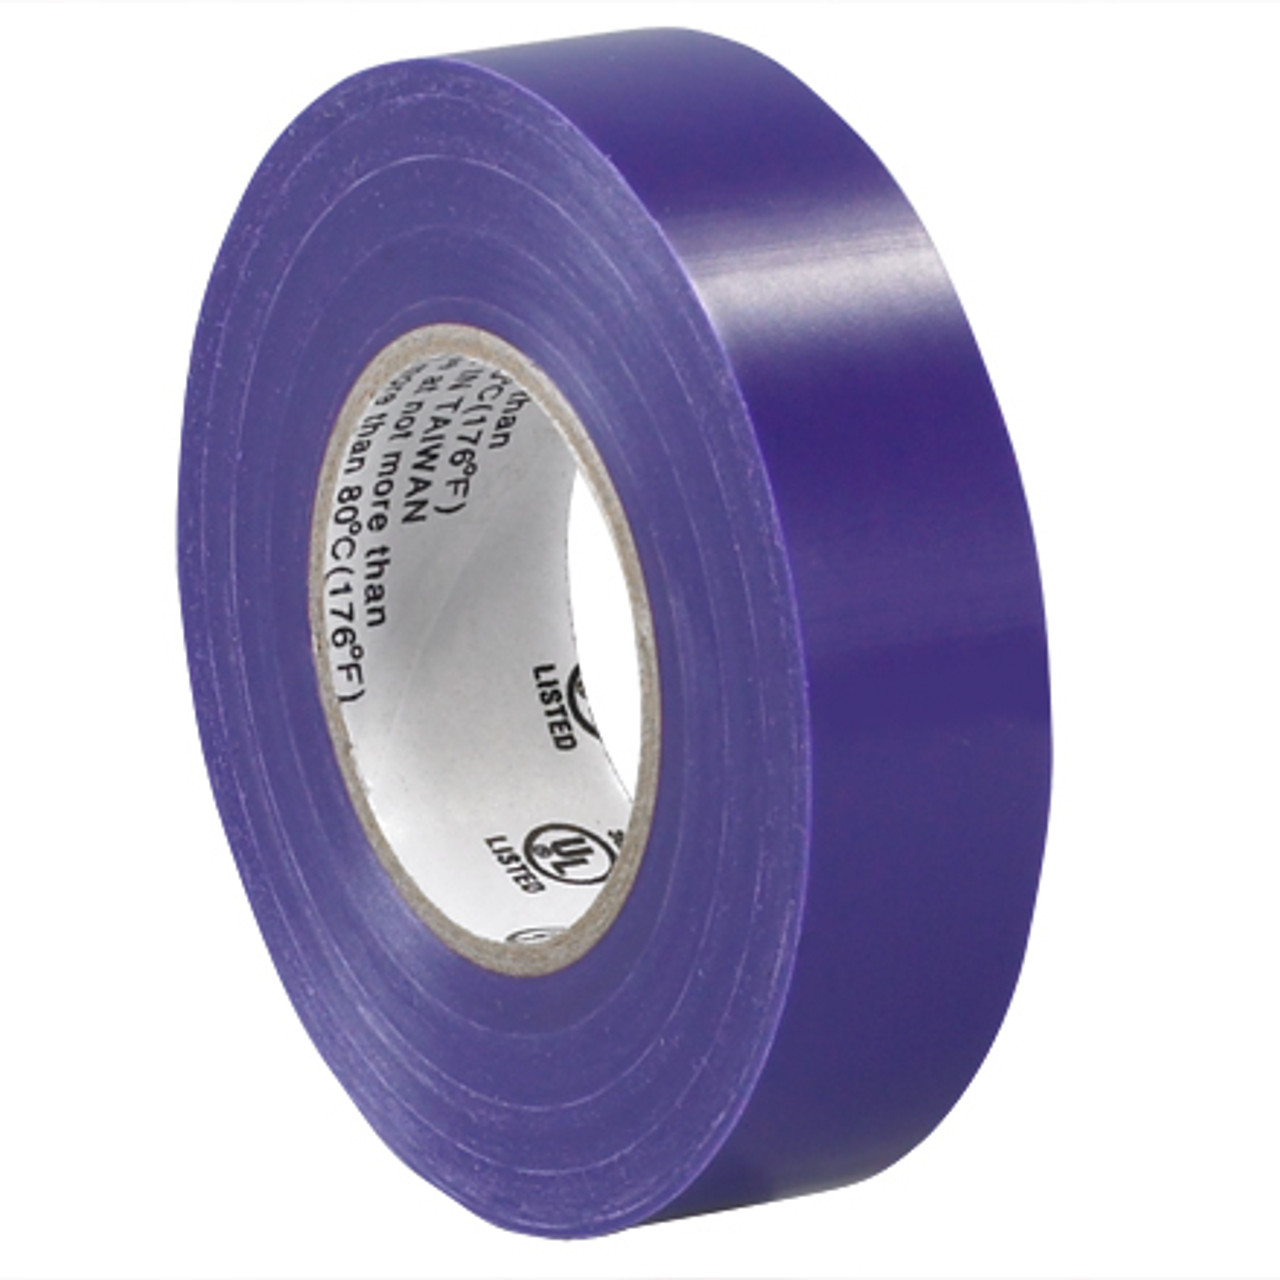 Vinyl Electrical Tape - Purple